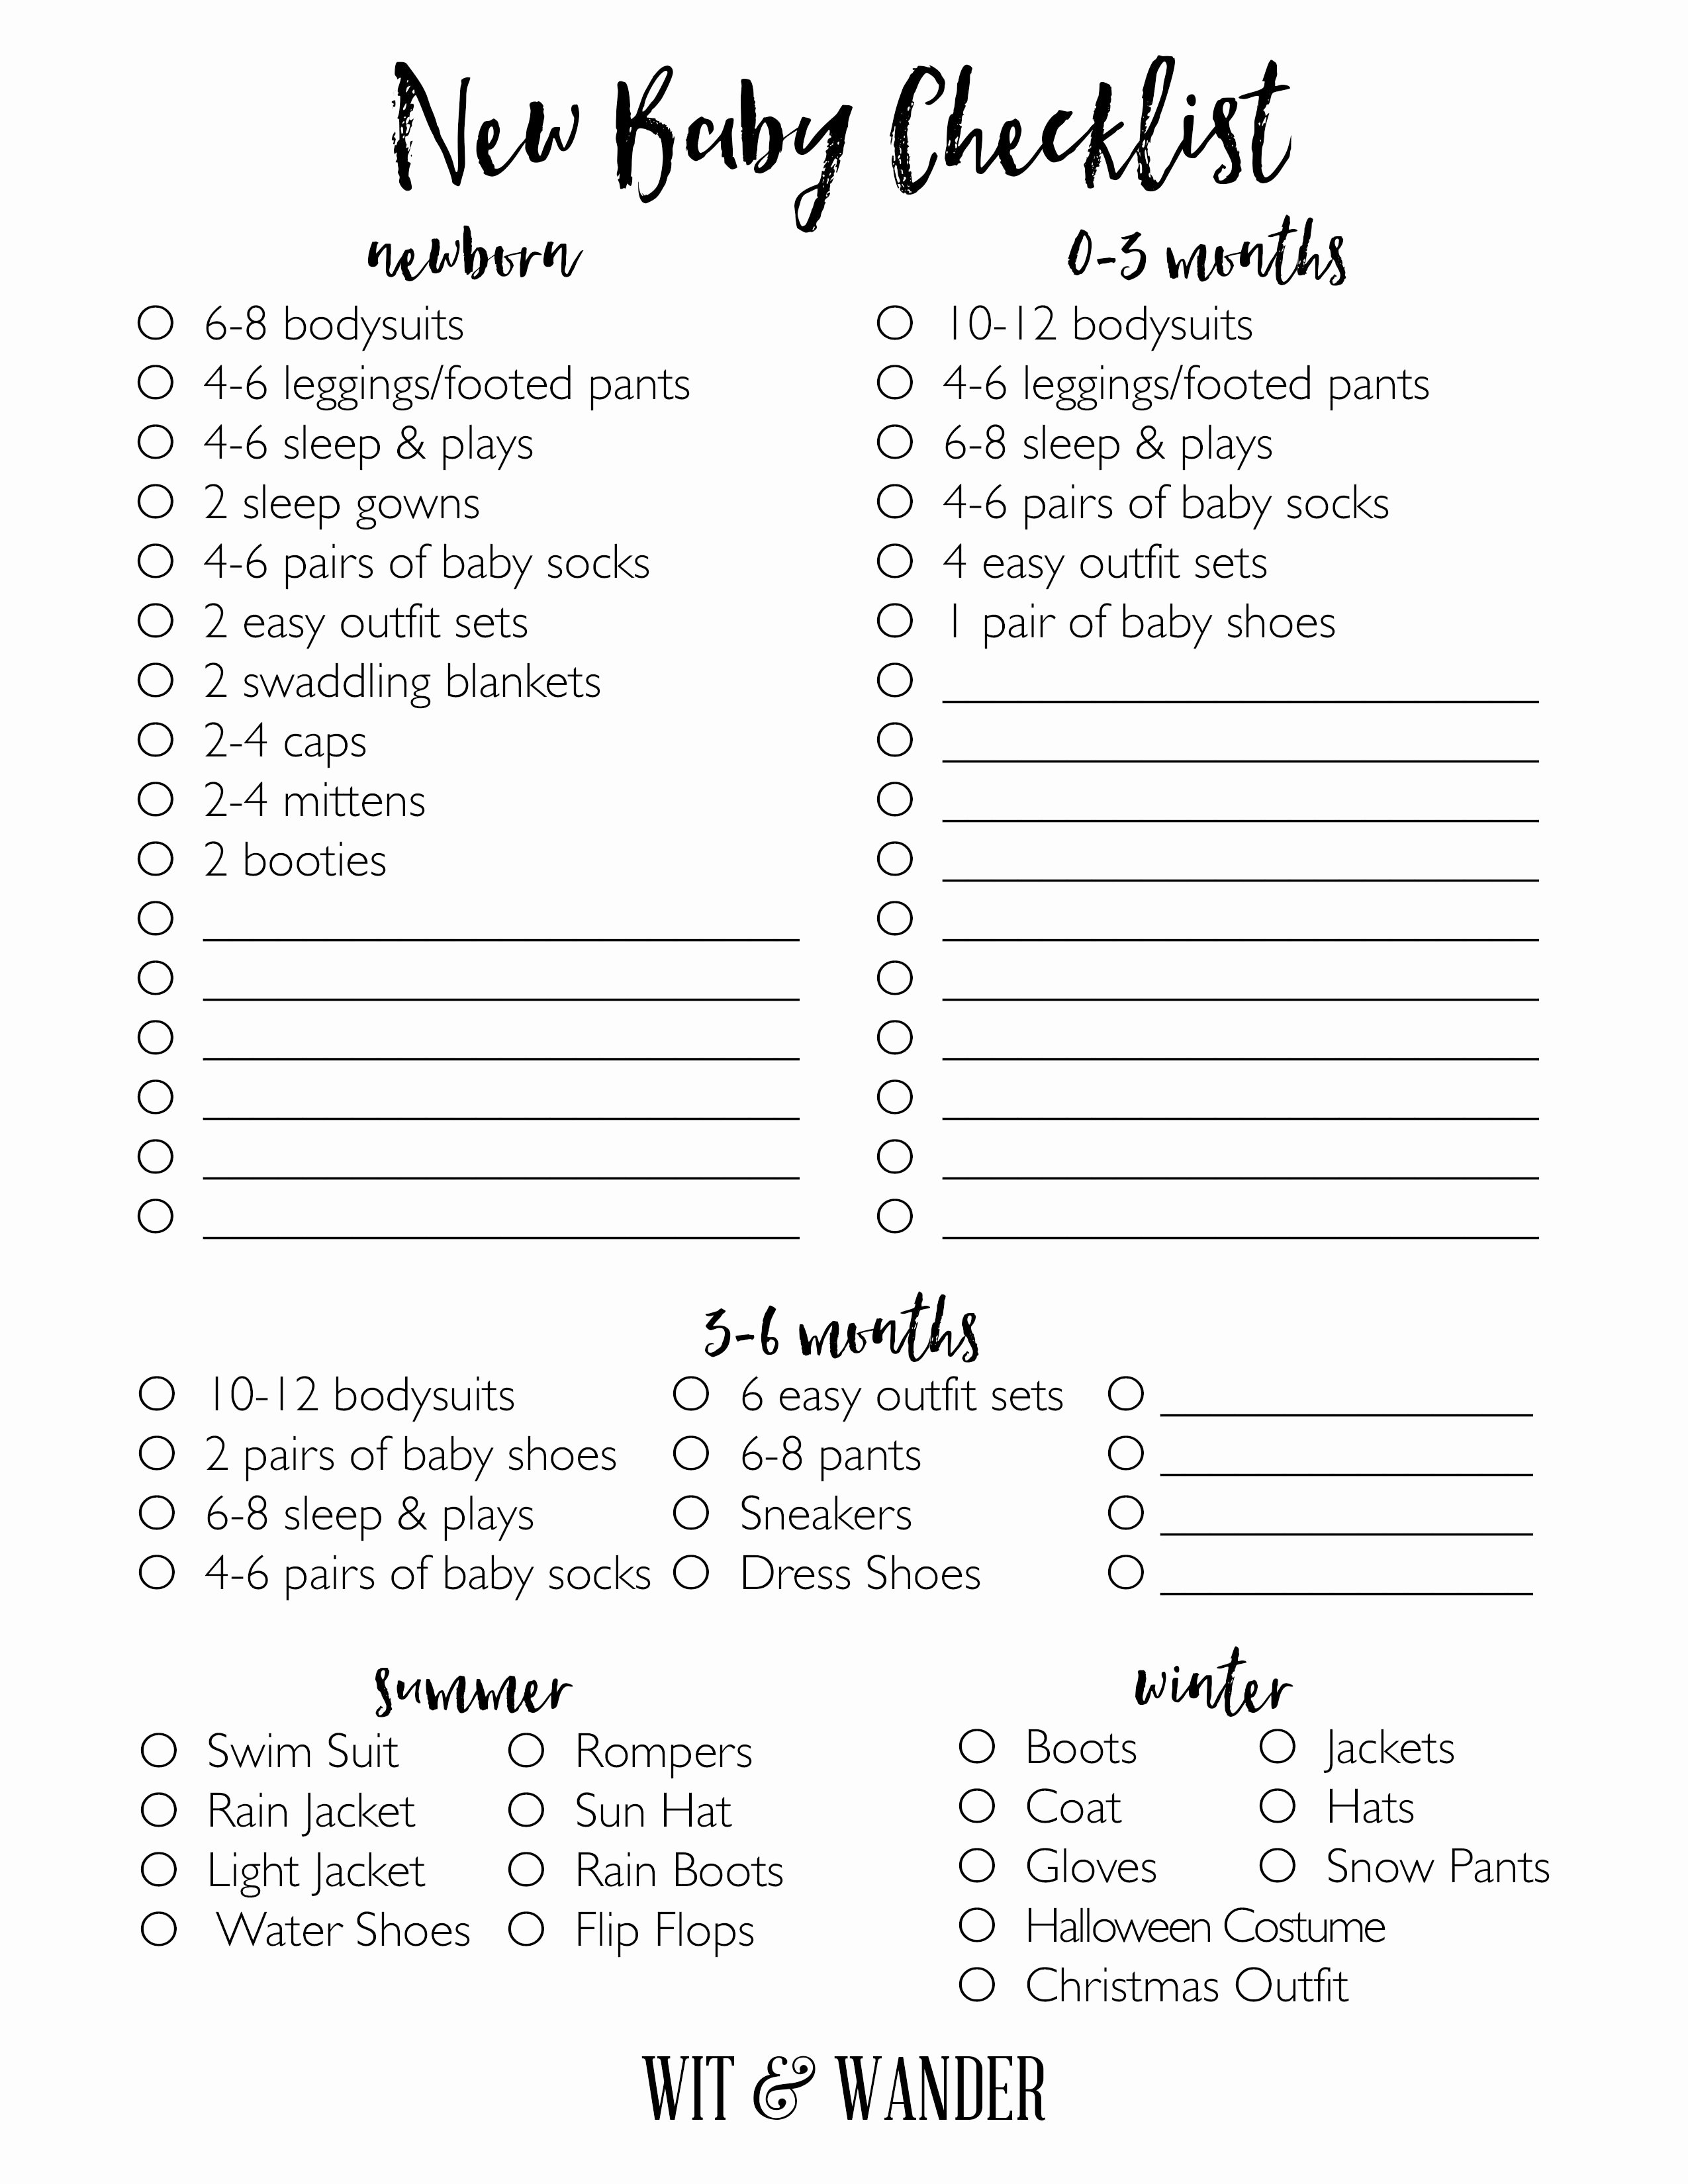 New Baby Checklist Printable Inspirational New Baby Checklist Prepping for Baby Our Handcrafted Life